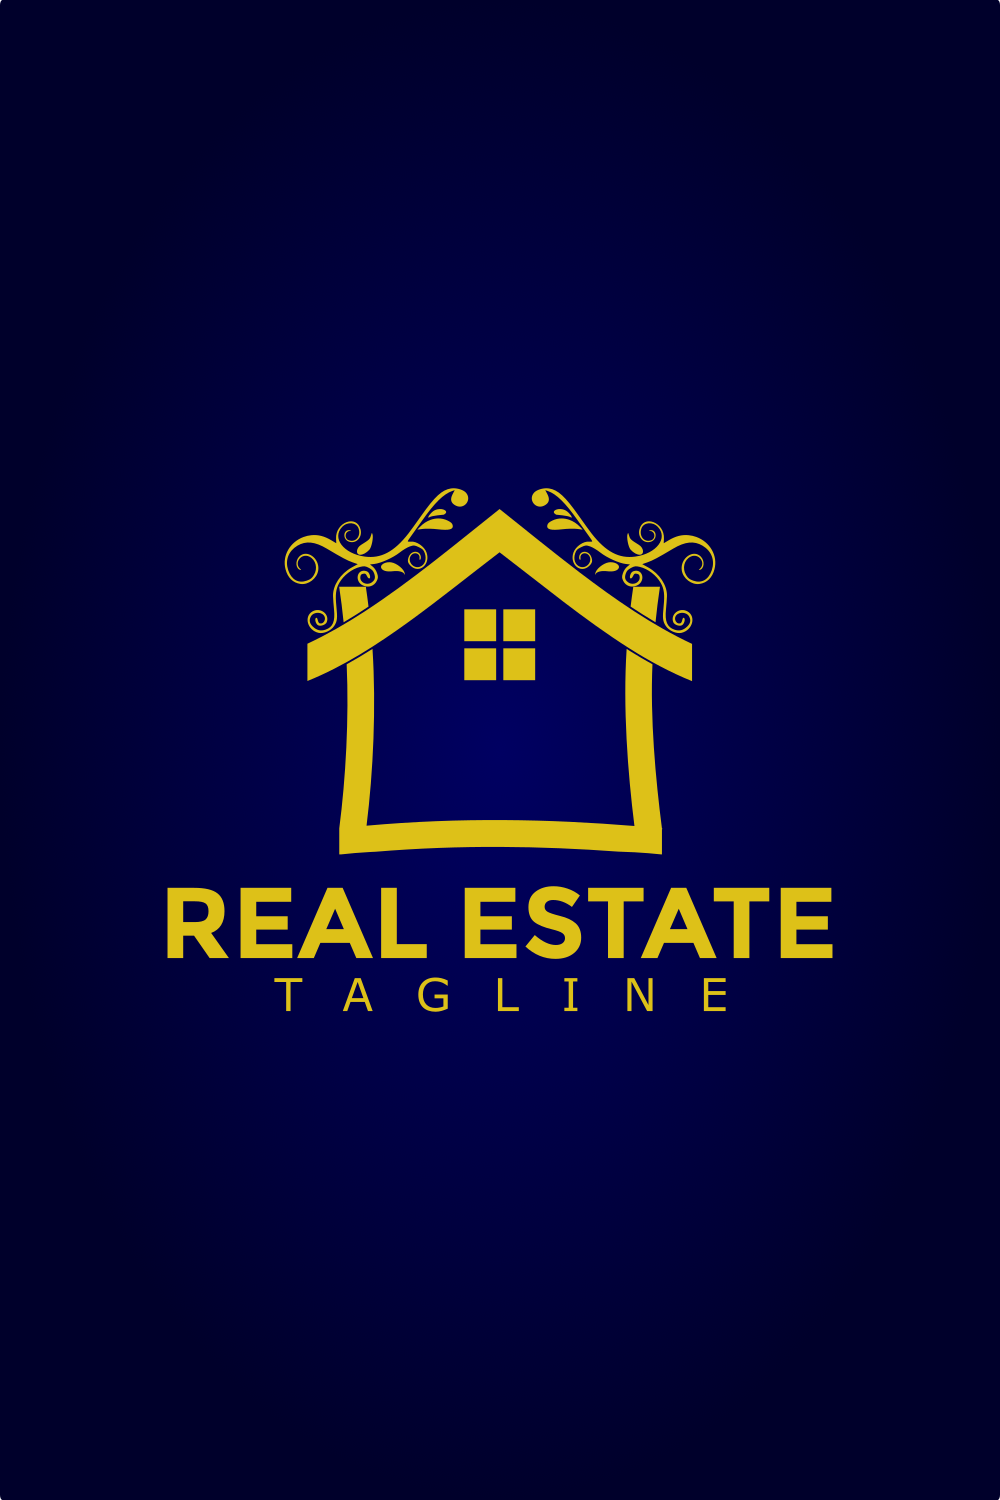 Awesome Real Estate Logo Design Template pinterest image.